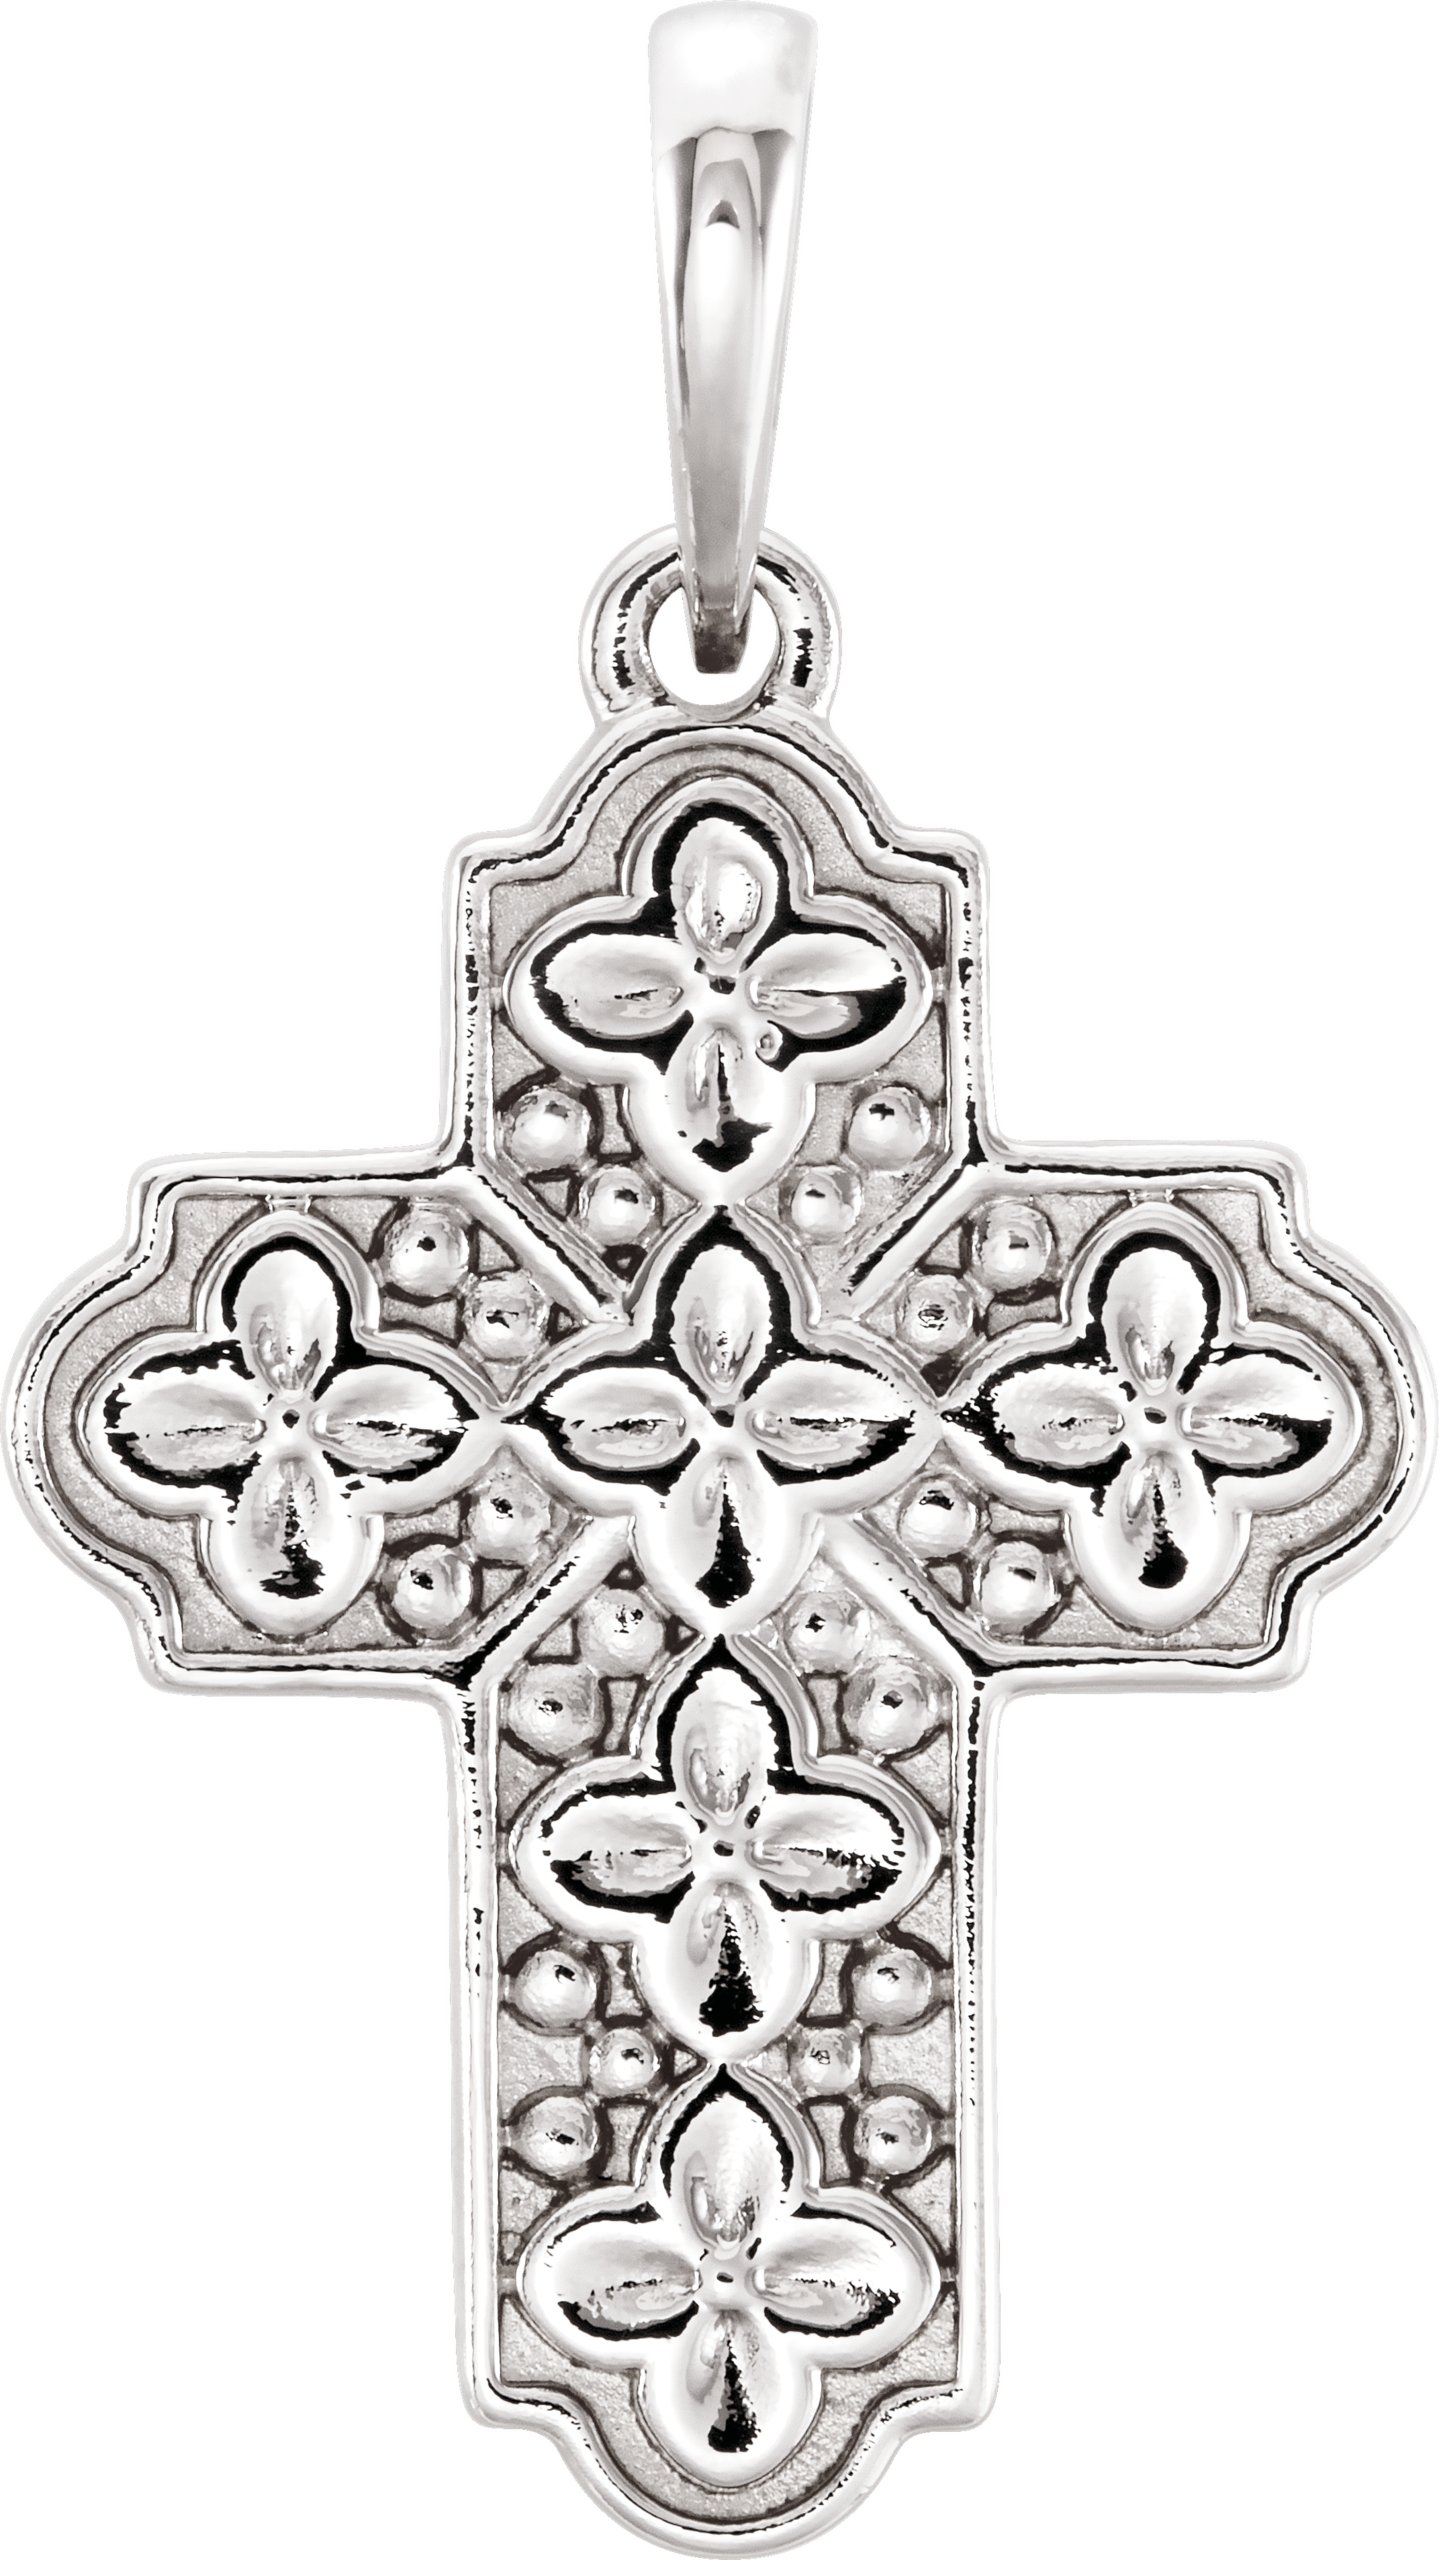 Sterling Silver Ornate Floral-Inspired Cross Pendant